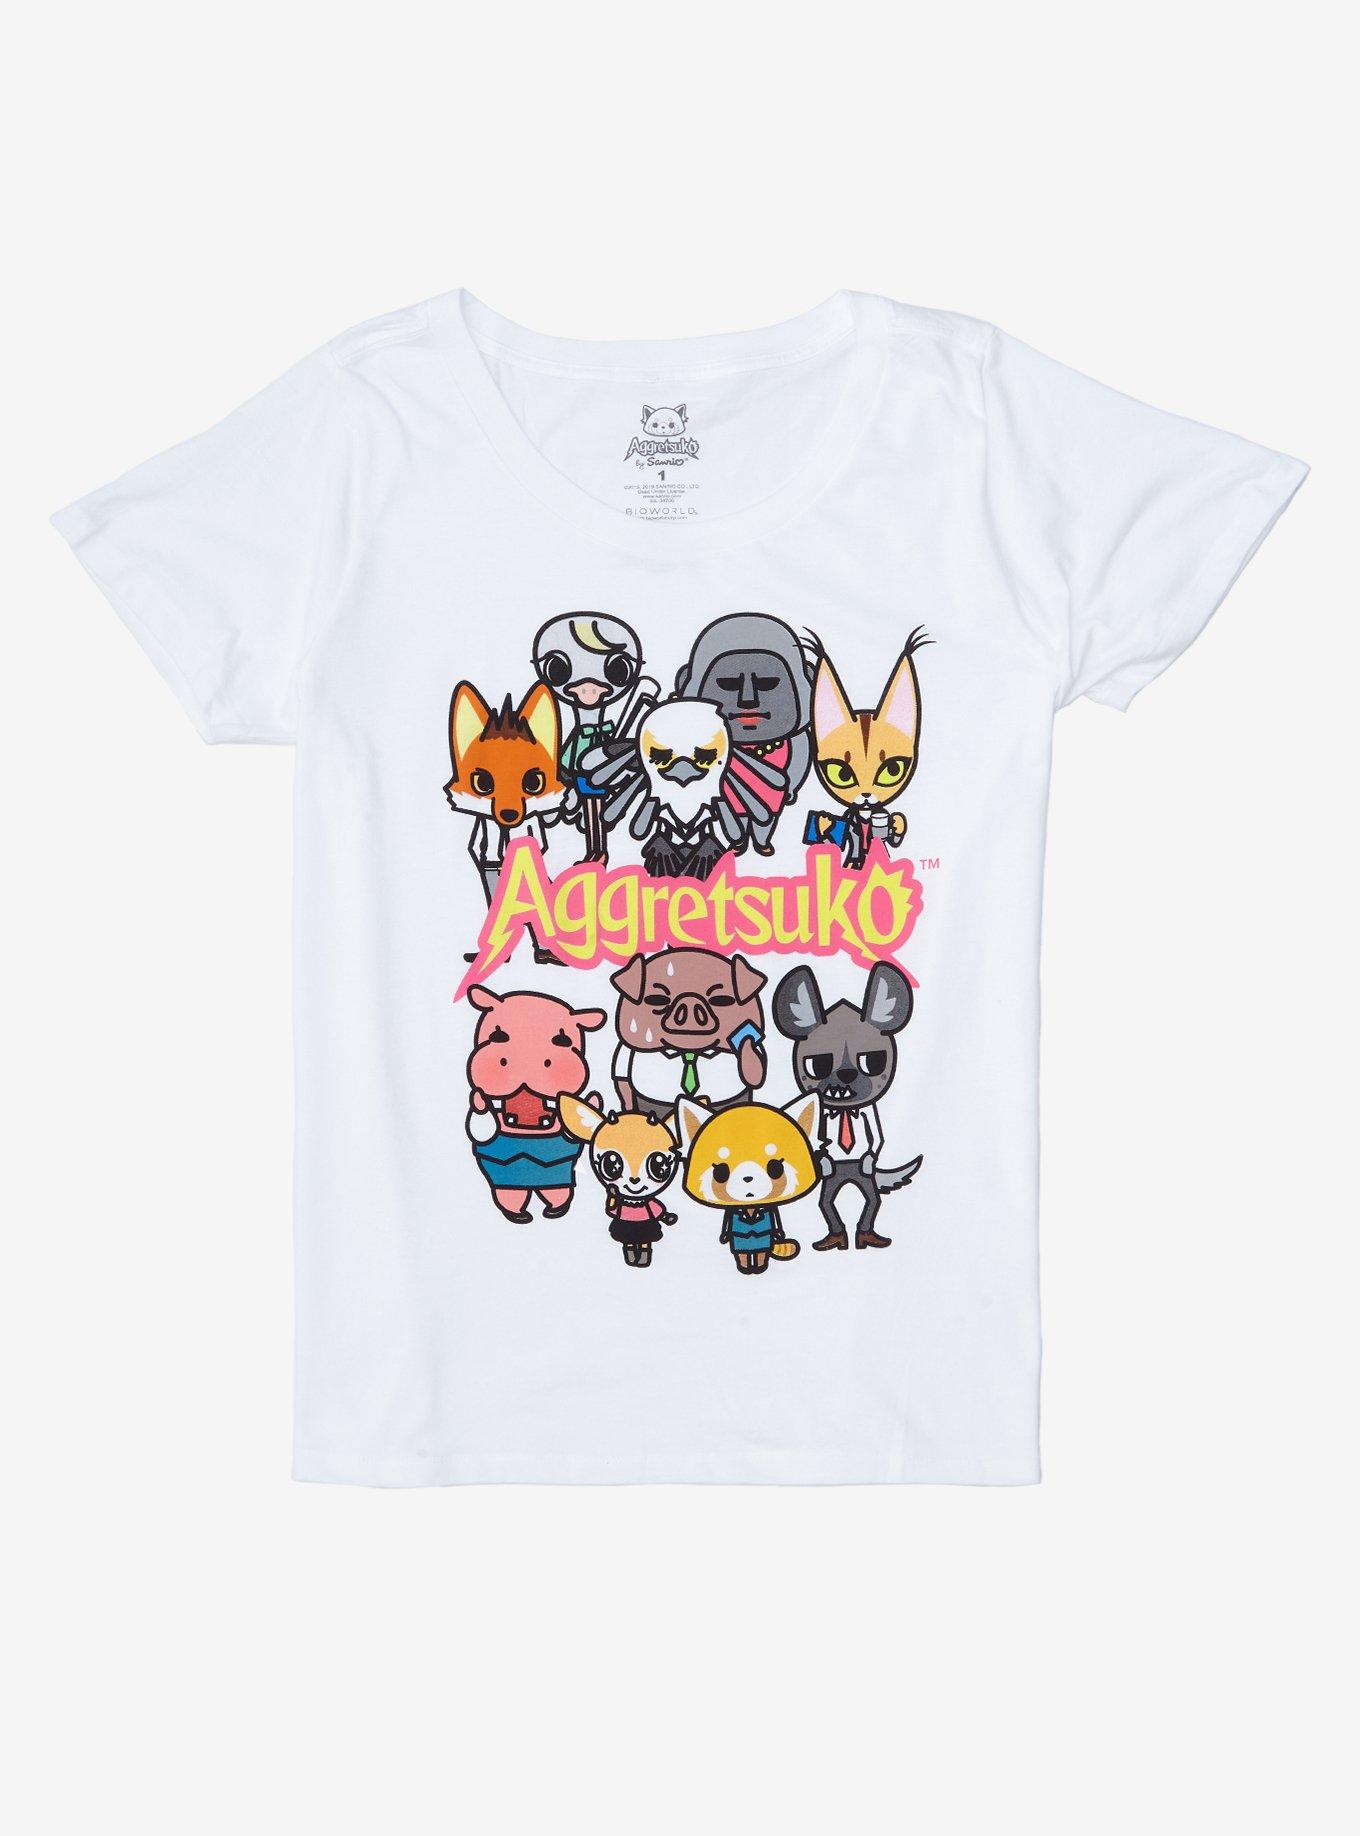 Aggretsuko Characters & Logo Girls T-Shirt Plus Size, WHITE, hi-res